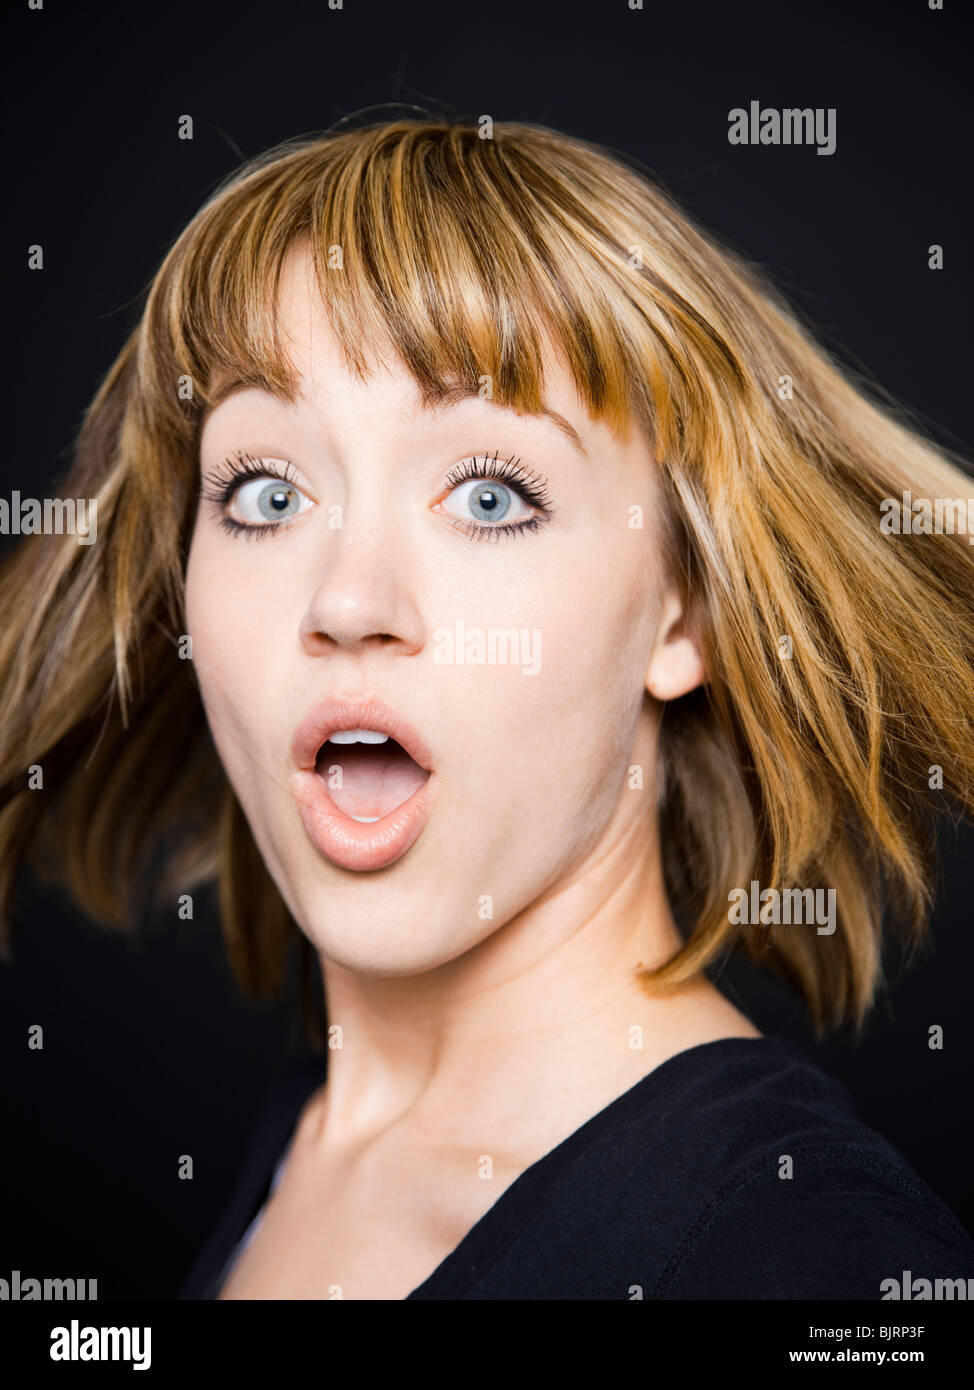 Studio portrait of shocked young woman Stock Photo